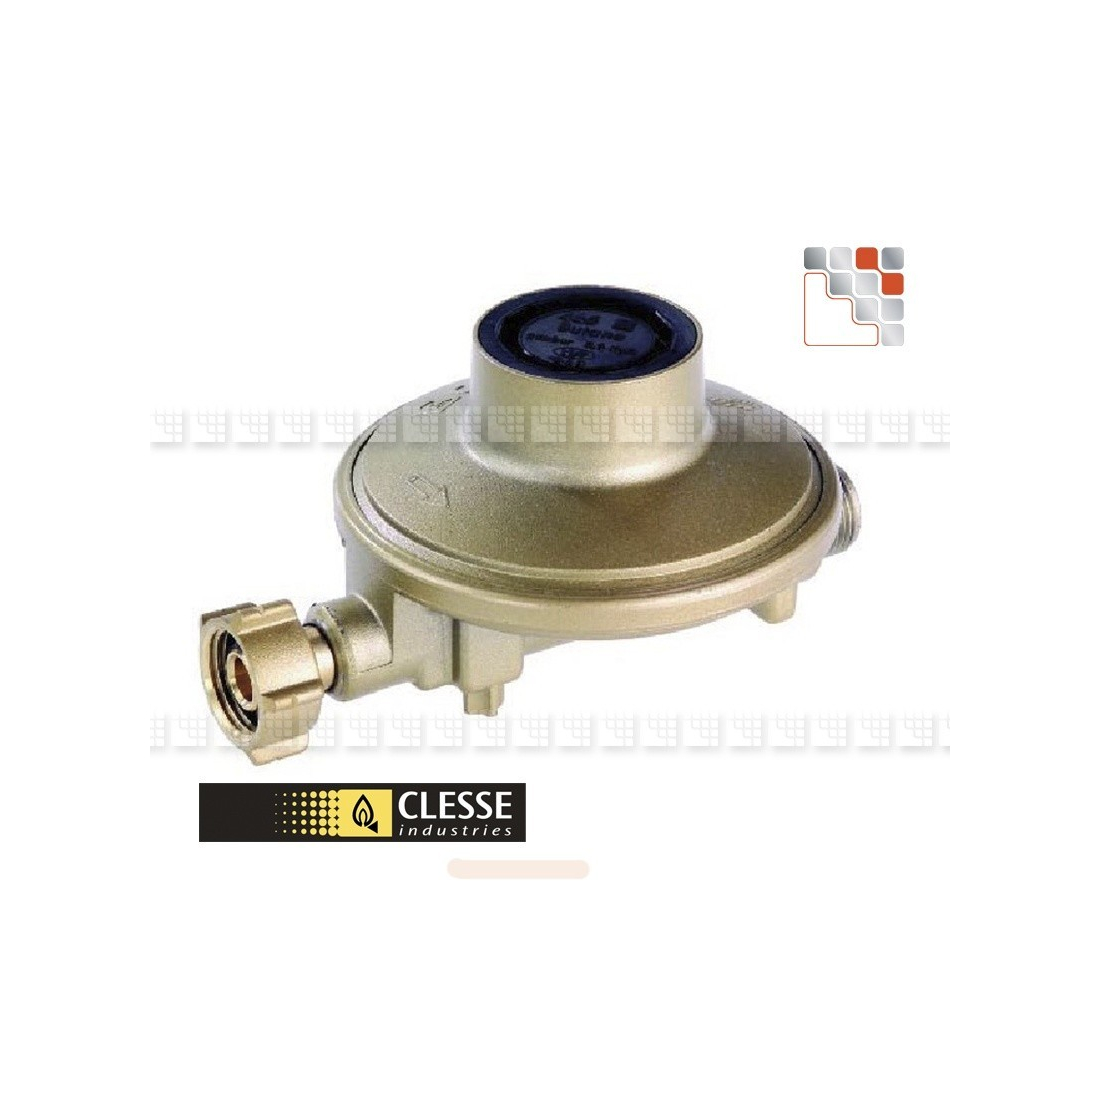 Butane high flow regulator 2.6 kg/h C06-NI1004 Clesse industries¨ Gas accessories